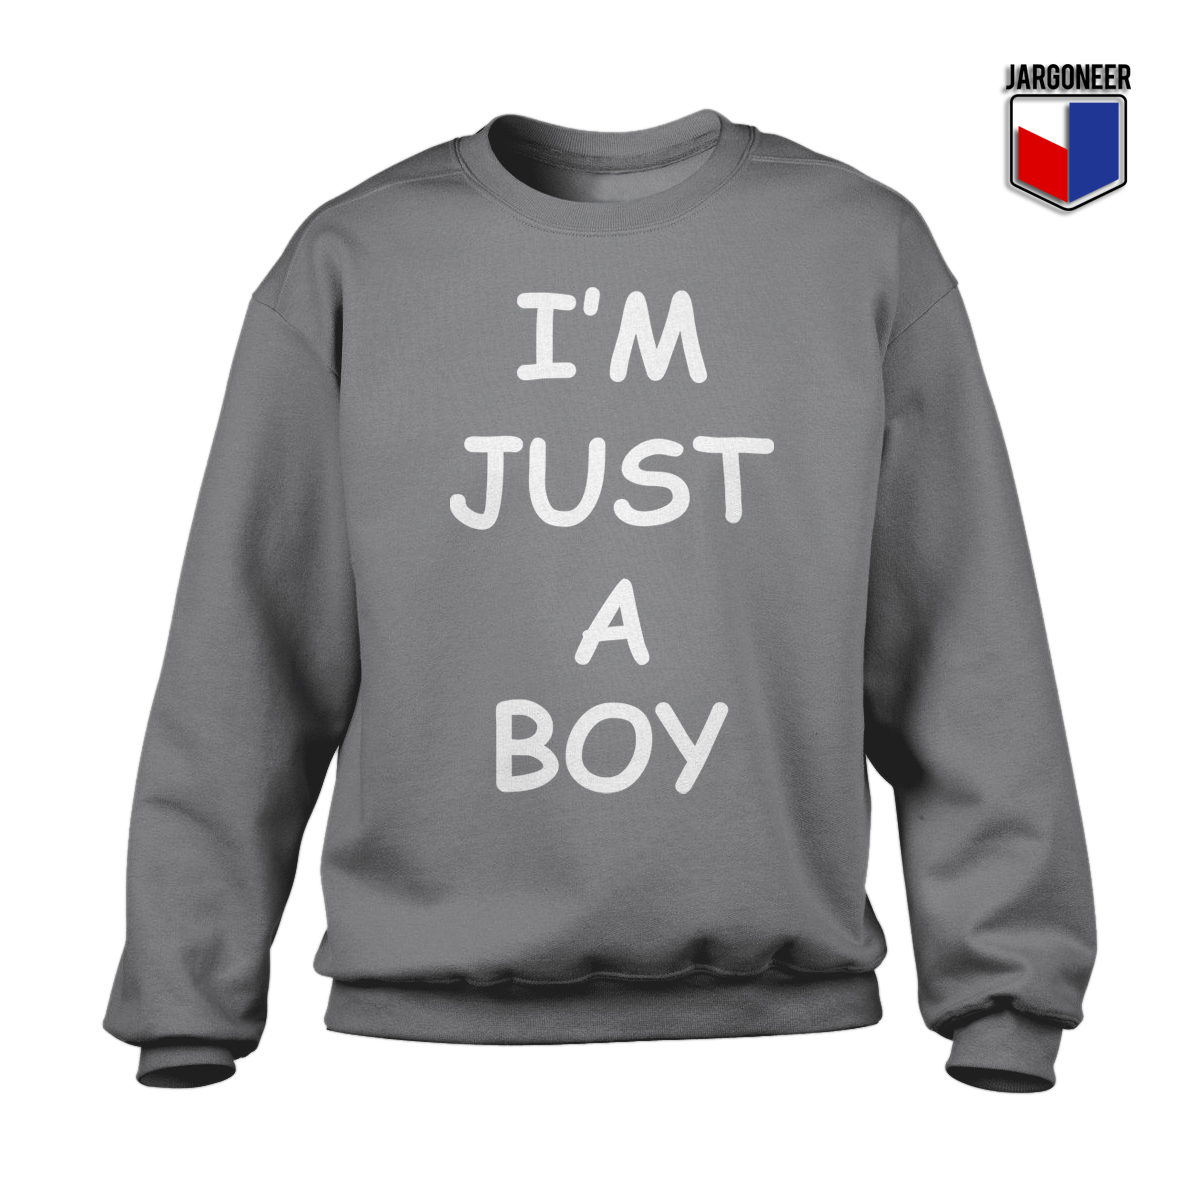 IM JUST A BOY Grey Sweatshirt - Shop Unique Graphic Cool Shirt Designs